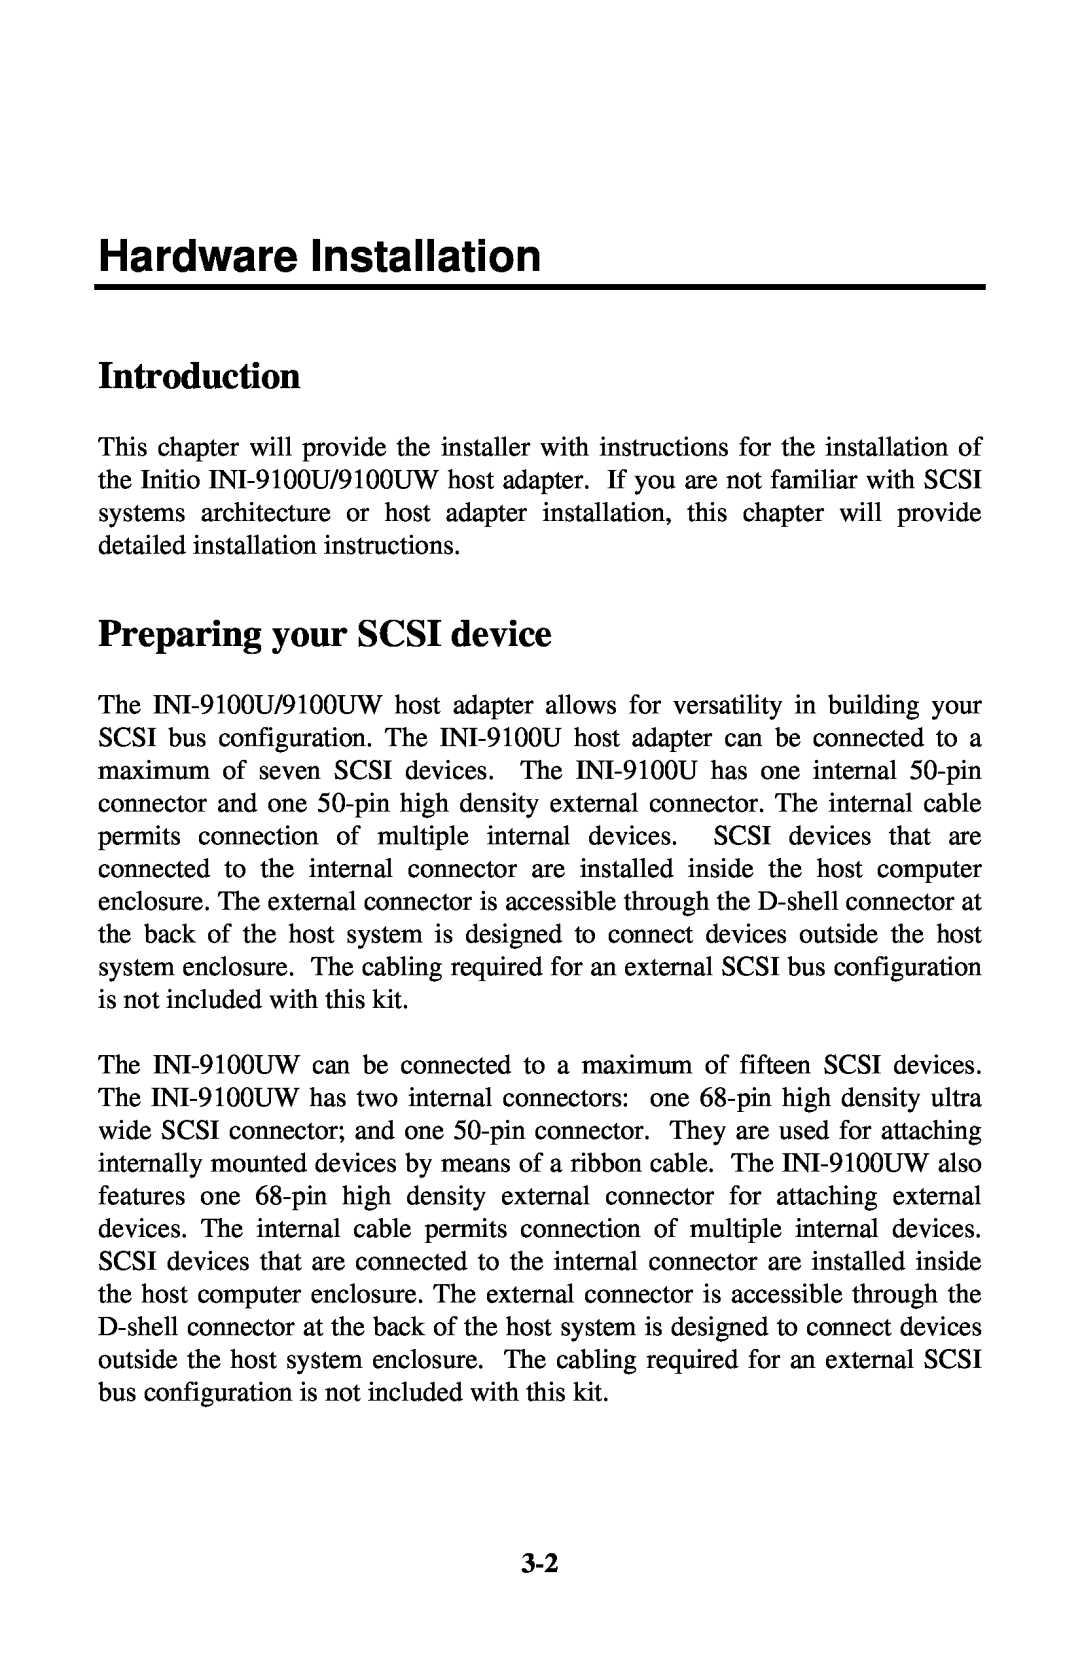 Initio INI-9100UW user manual Hardware Installation, Introduction, Preparing your SCSI device 